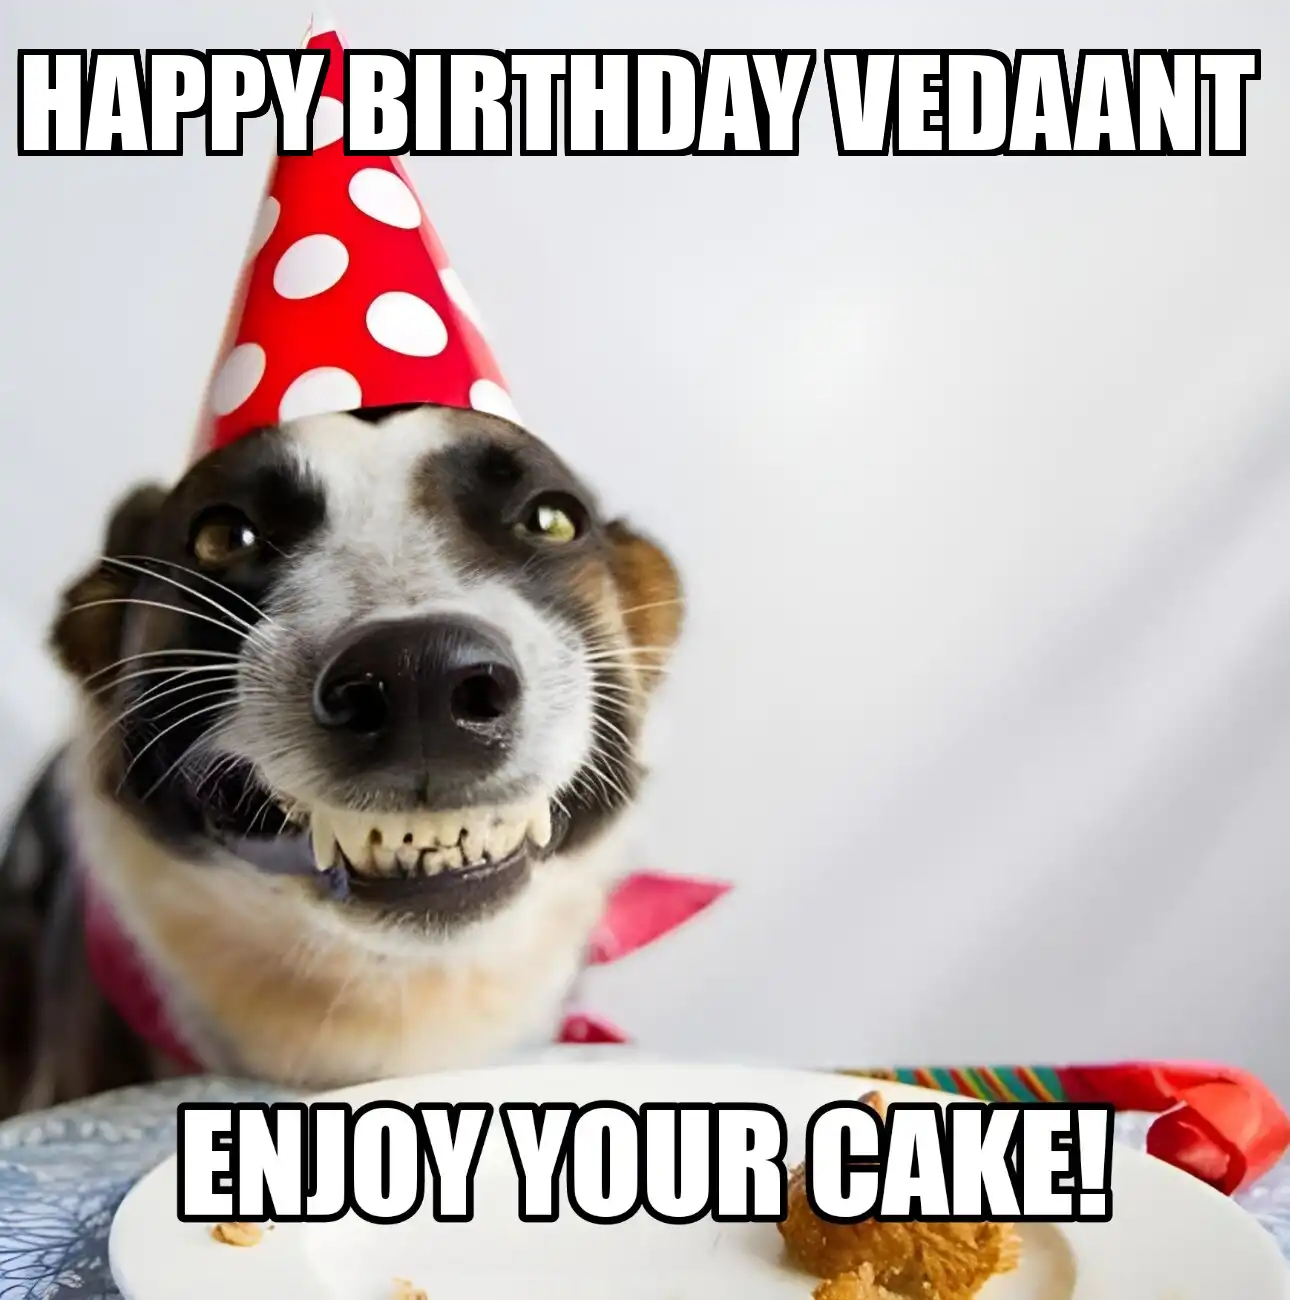 Happy Birthday Vedaant Enjoy Your Cake Dog Meme